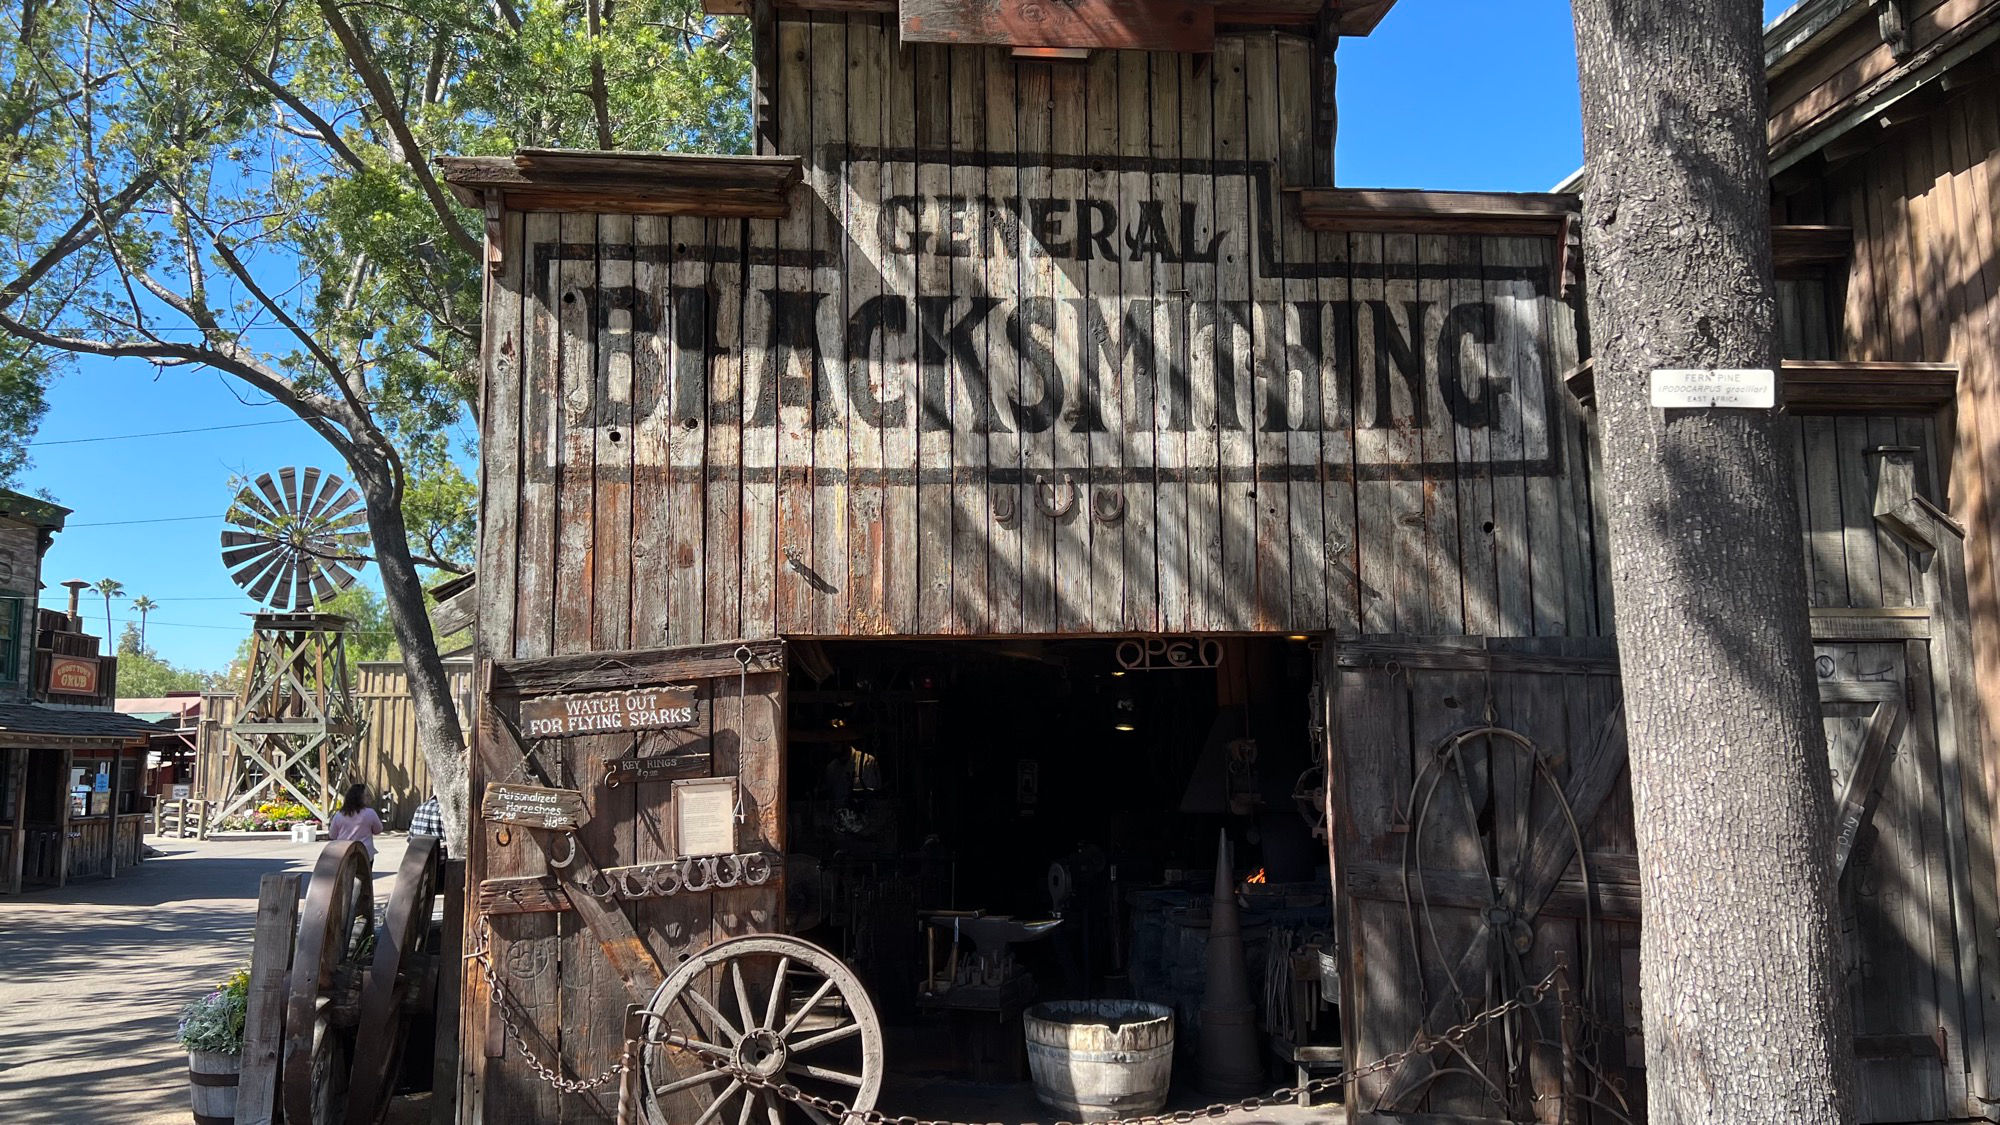 Knott's Berry Farm Blacksmith